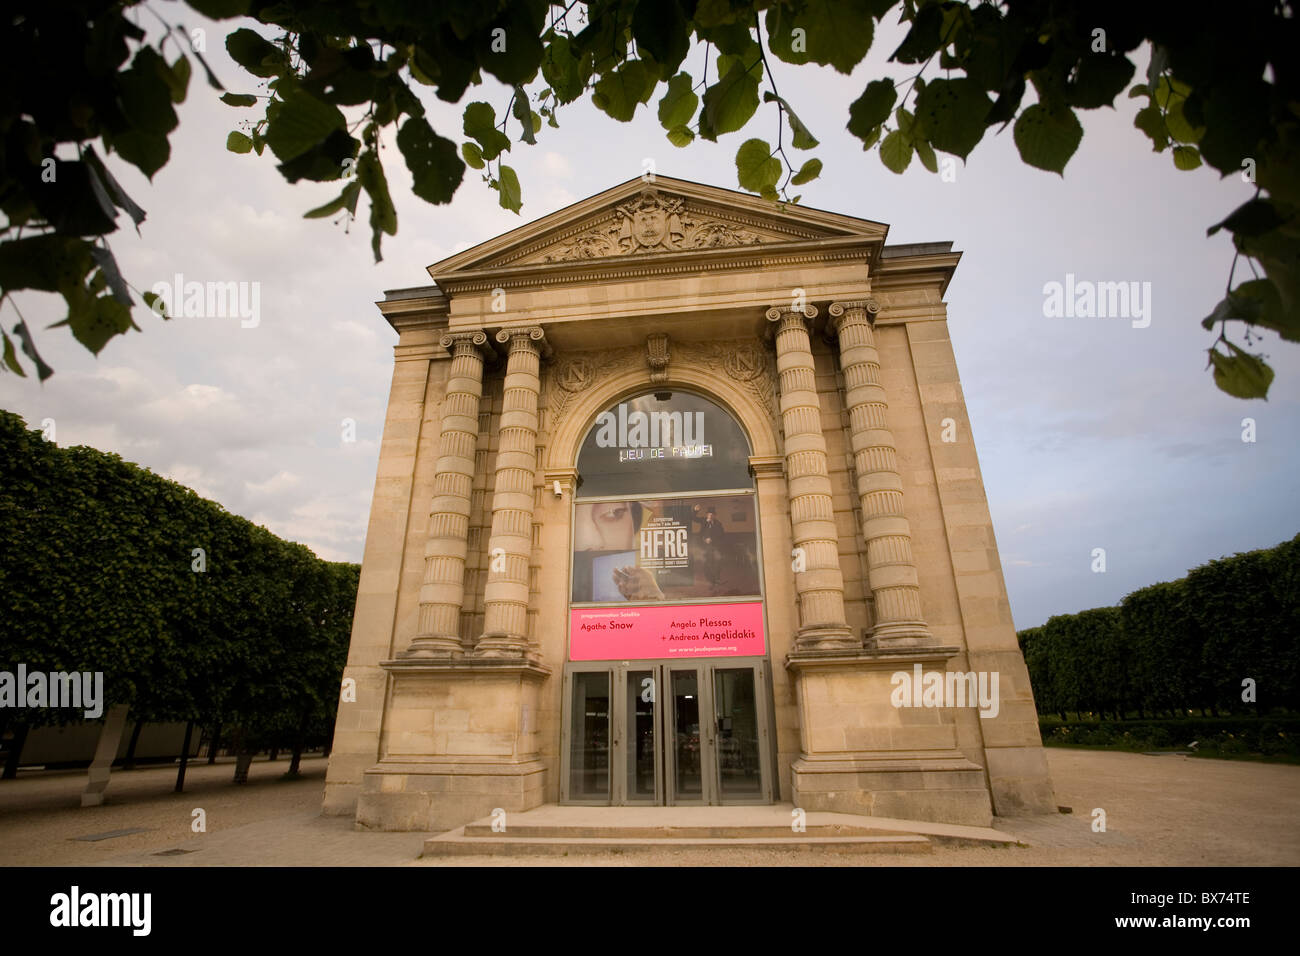 Il neoclassico jeu de Paume, parte del Centre national de la Photographie di Parigi Foto Stock